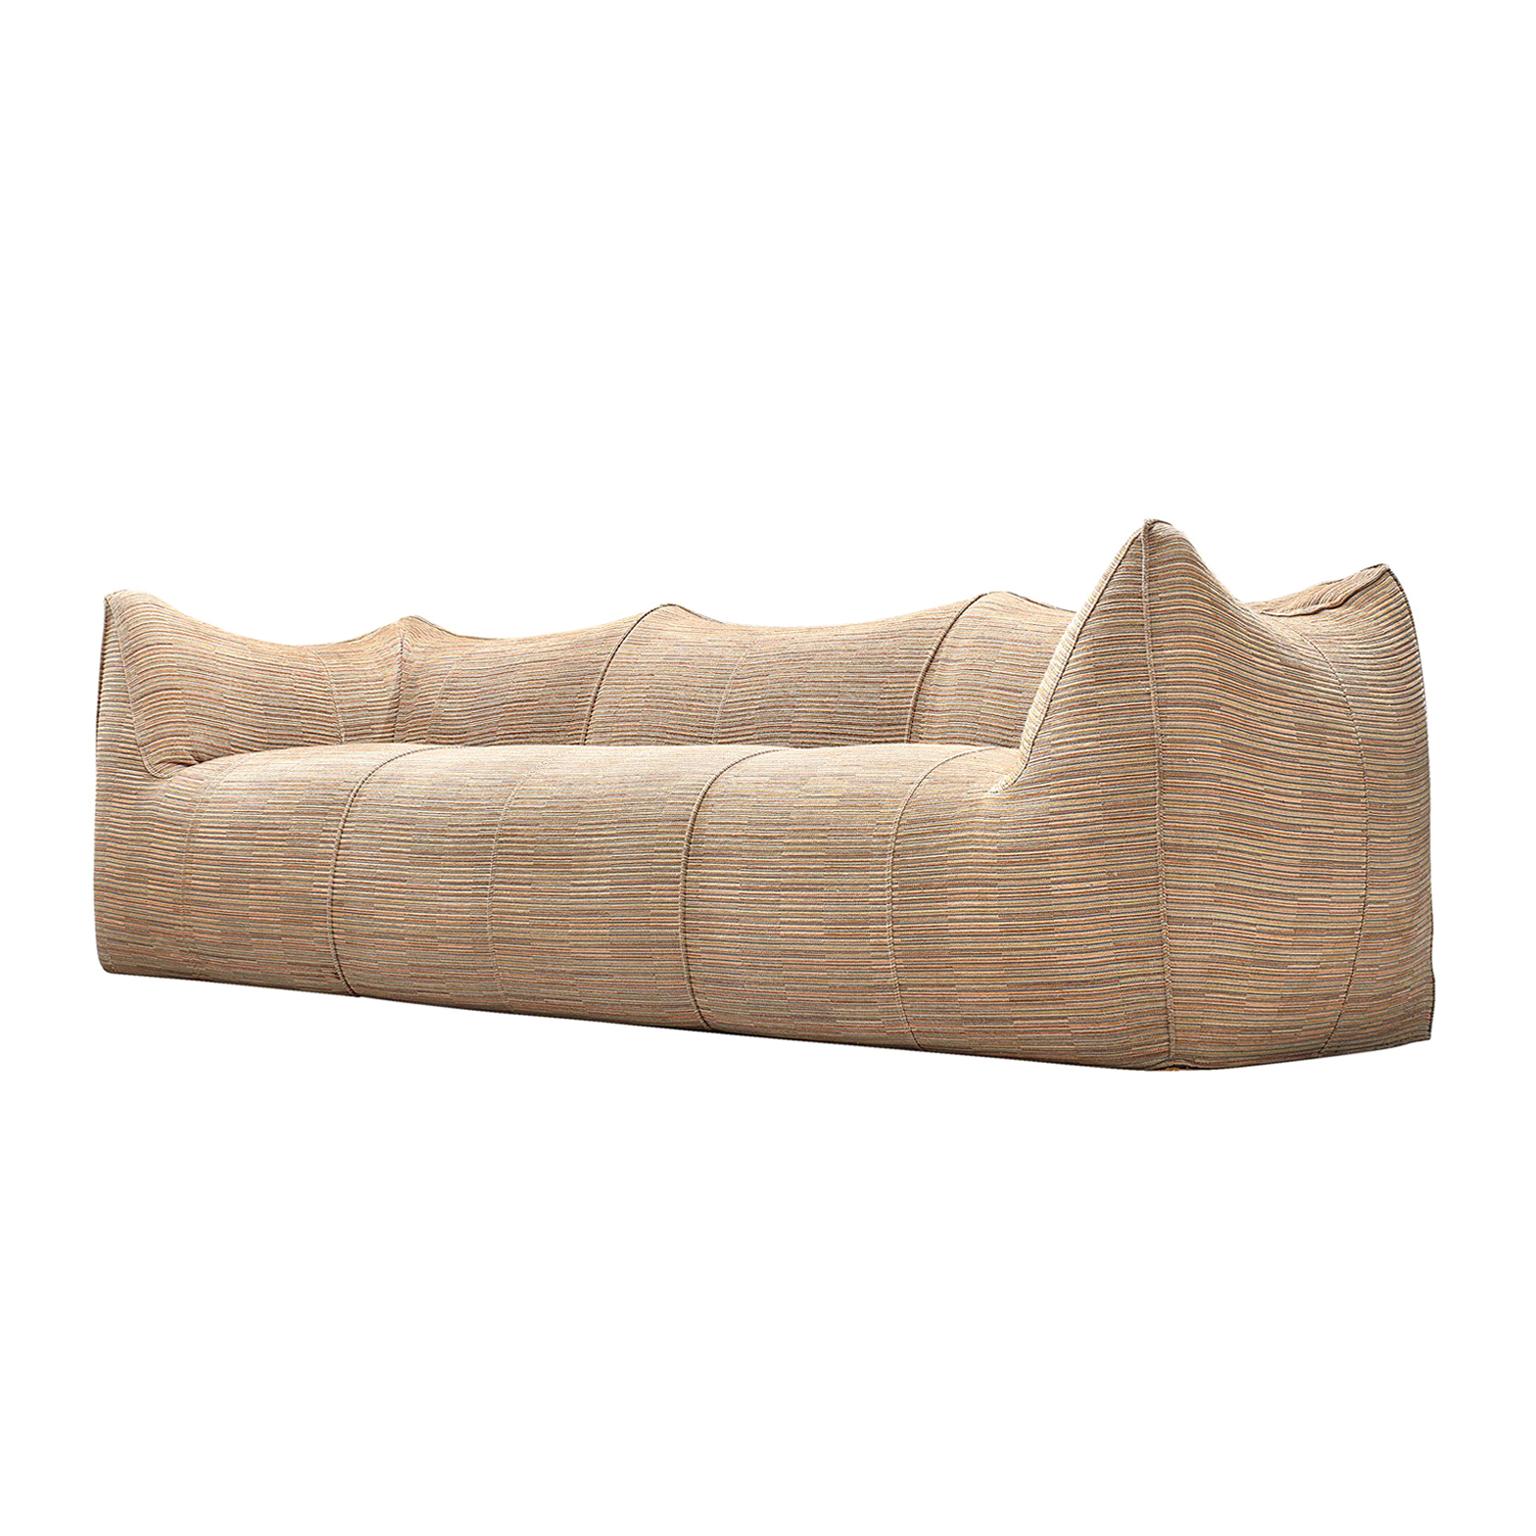 Mario Bellini Grand 'Le Bambole' Sofa in Beige Patterned Fabric